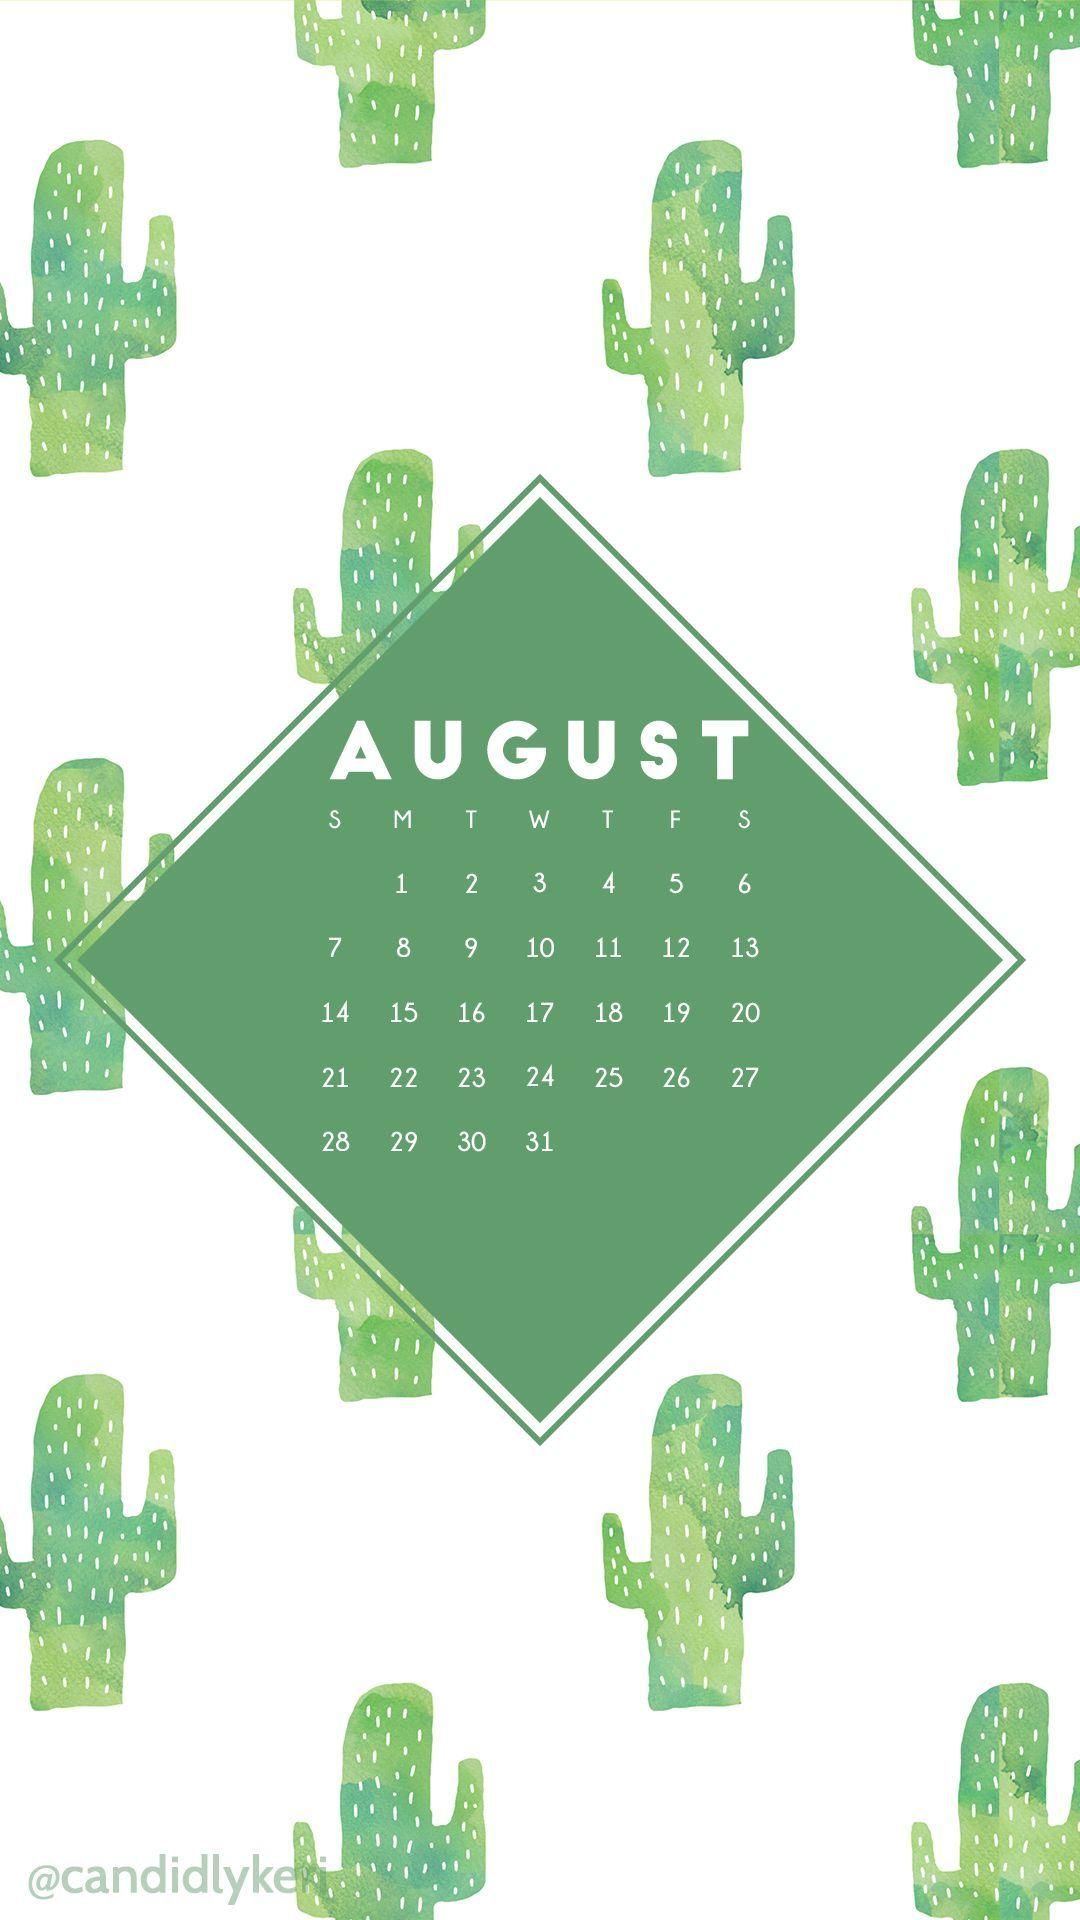 Cactus fun cacti green watercolor background August calendar 2016